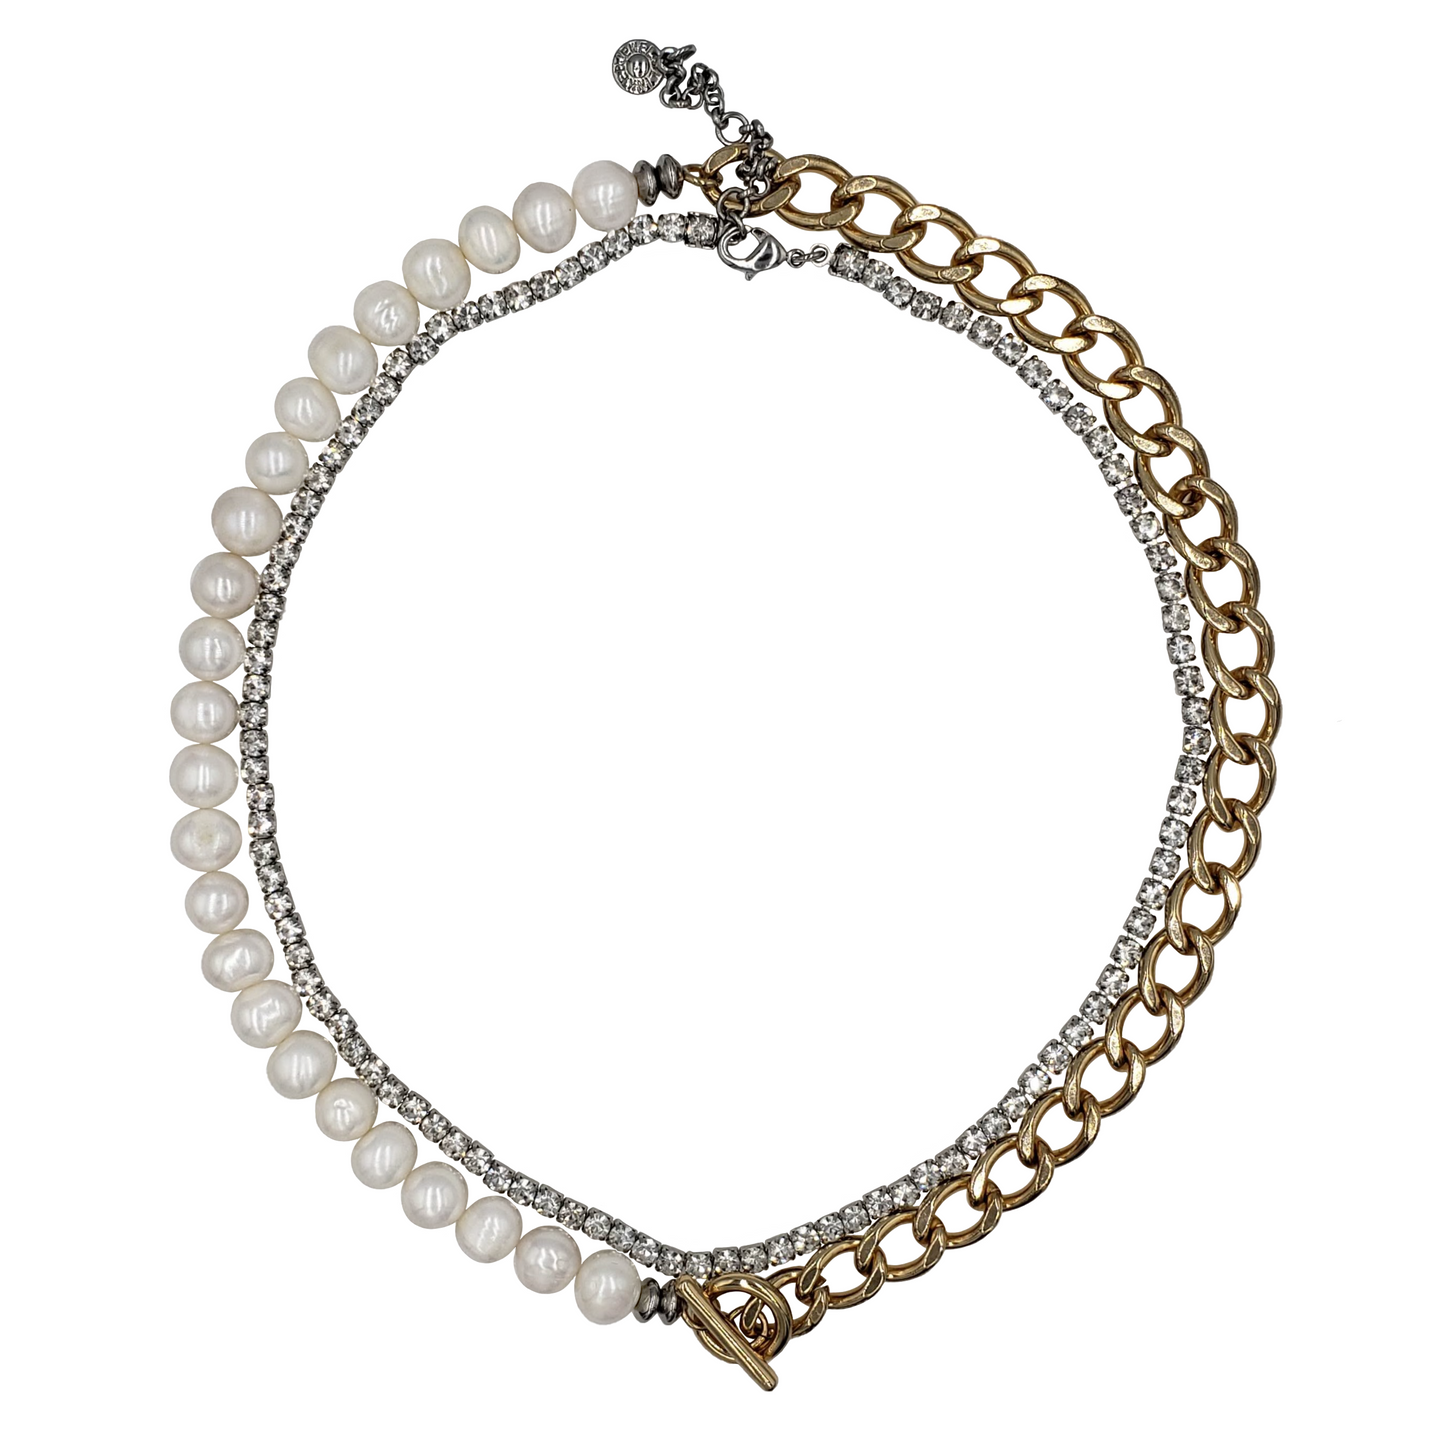 DIY Chanel Inspired Pearl Bracelet ⋆ Dream a Little Bigger